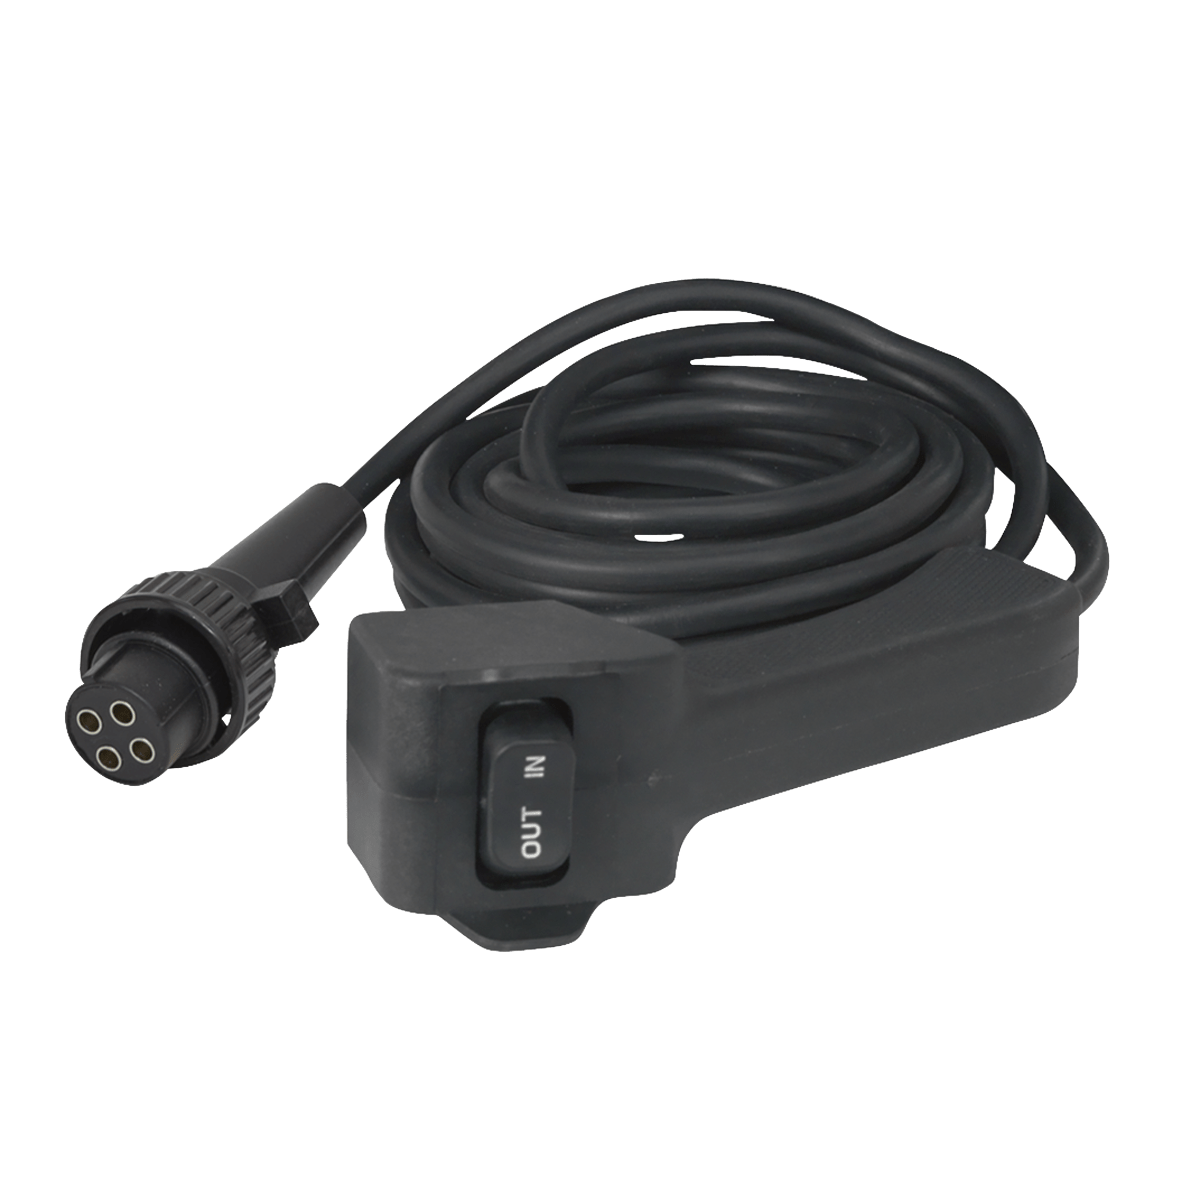 Sealey ATV2040 Wireless Winch Combo Kit